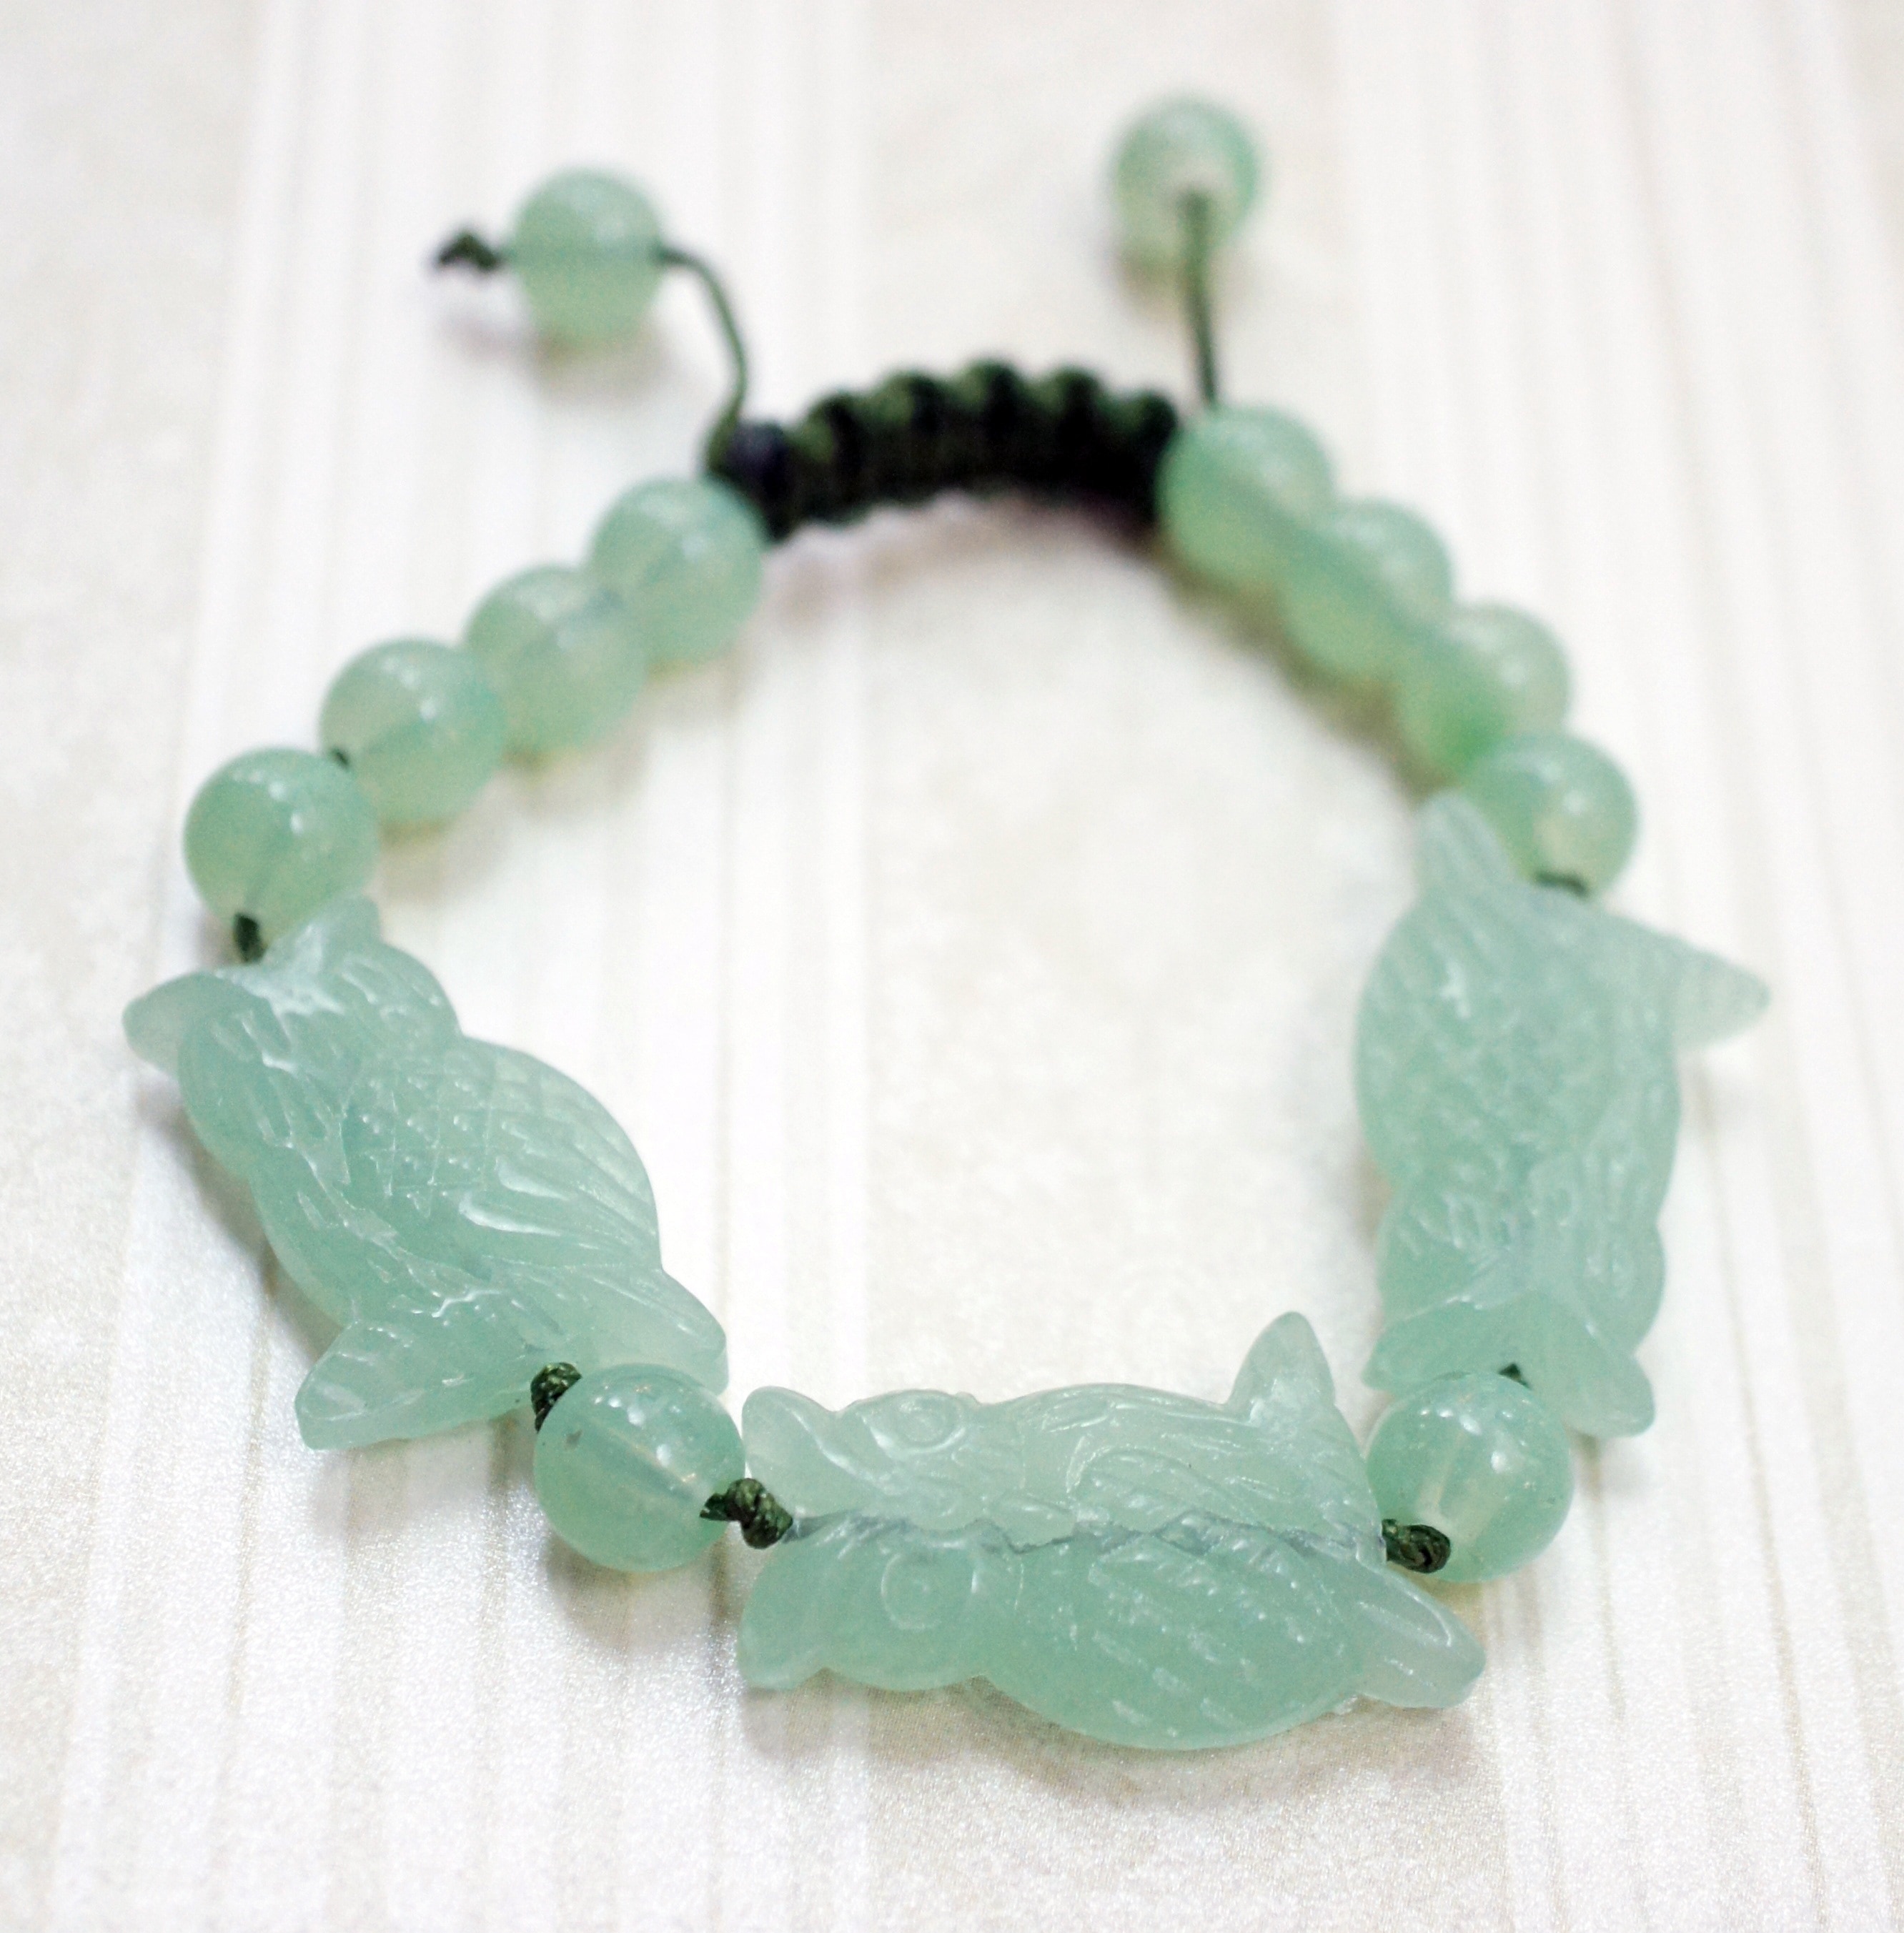 Bracelet, Stones, Green, Owl, Aventurine, green color, close-up